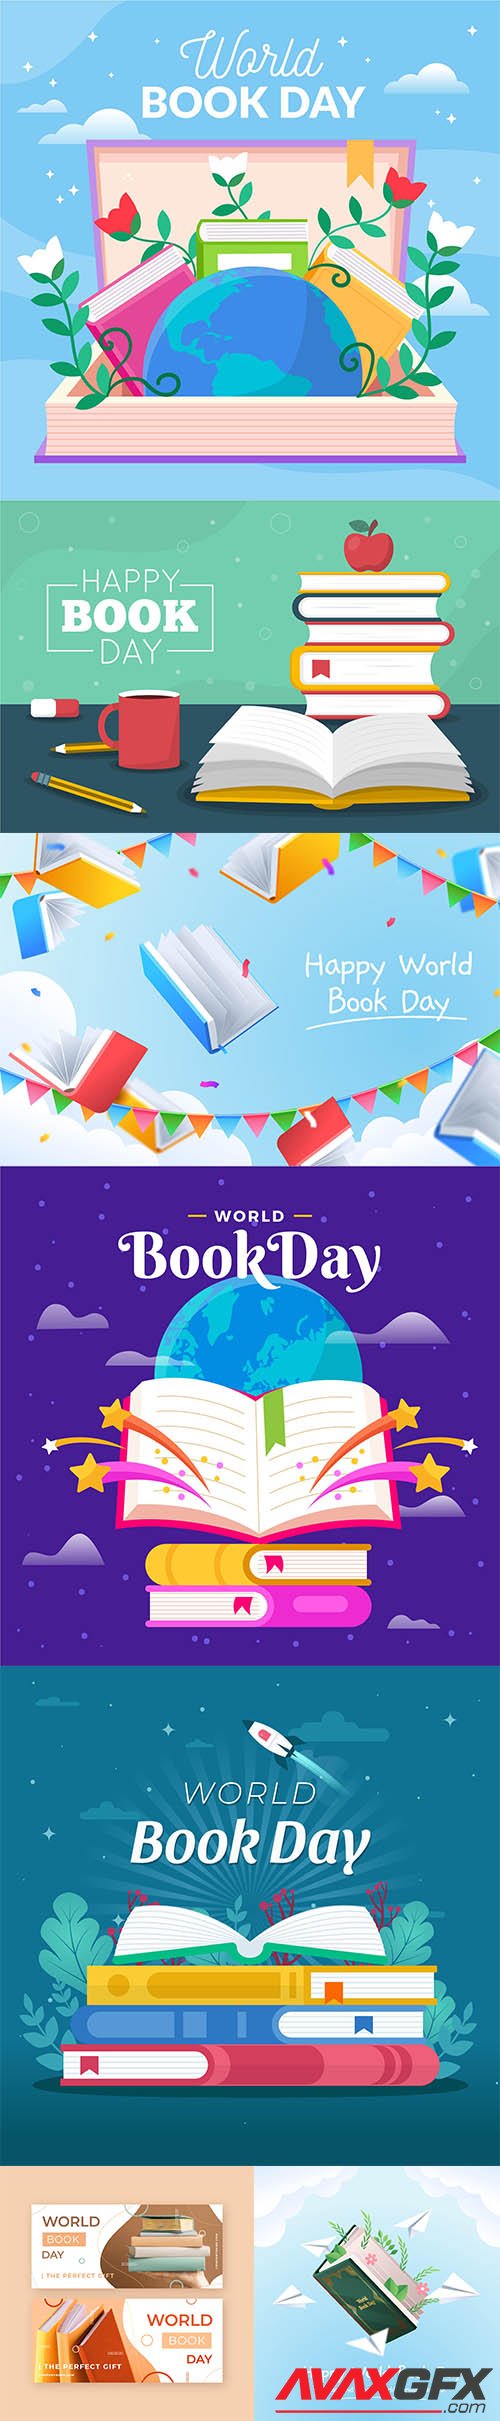 Flat world book day illustrations set